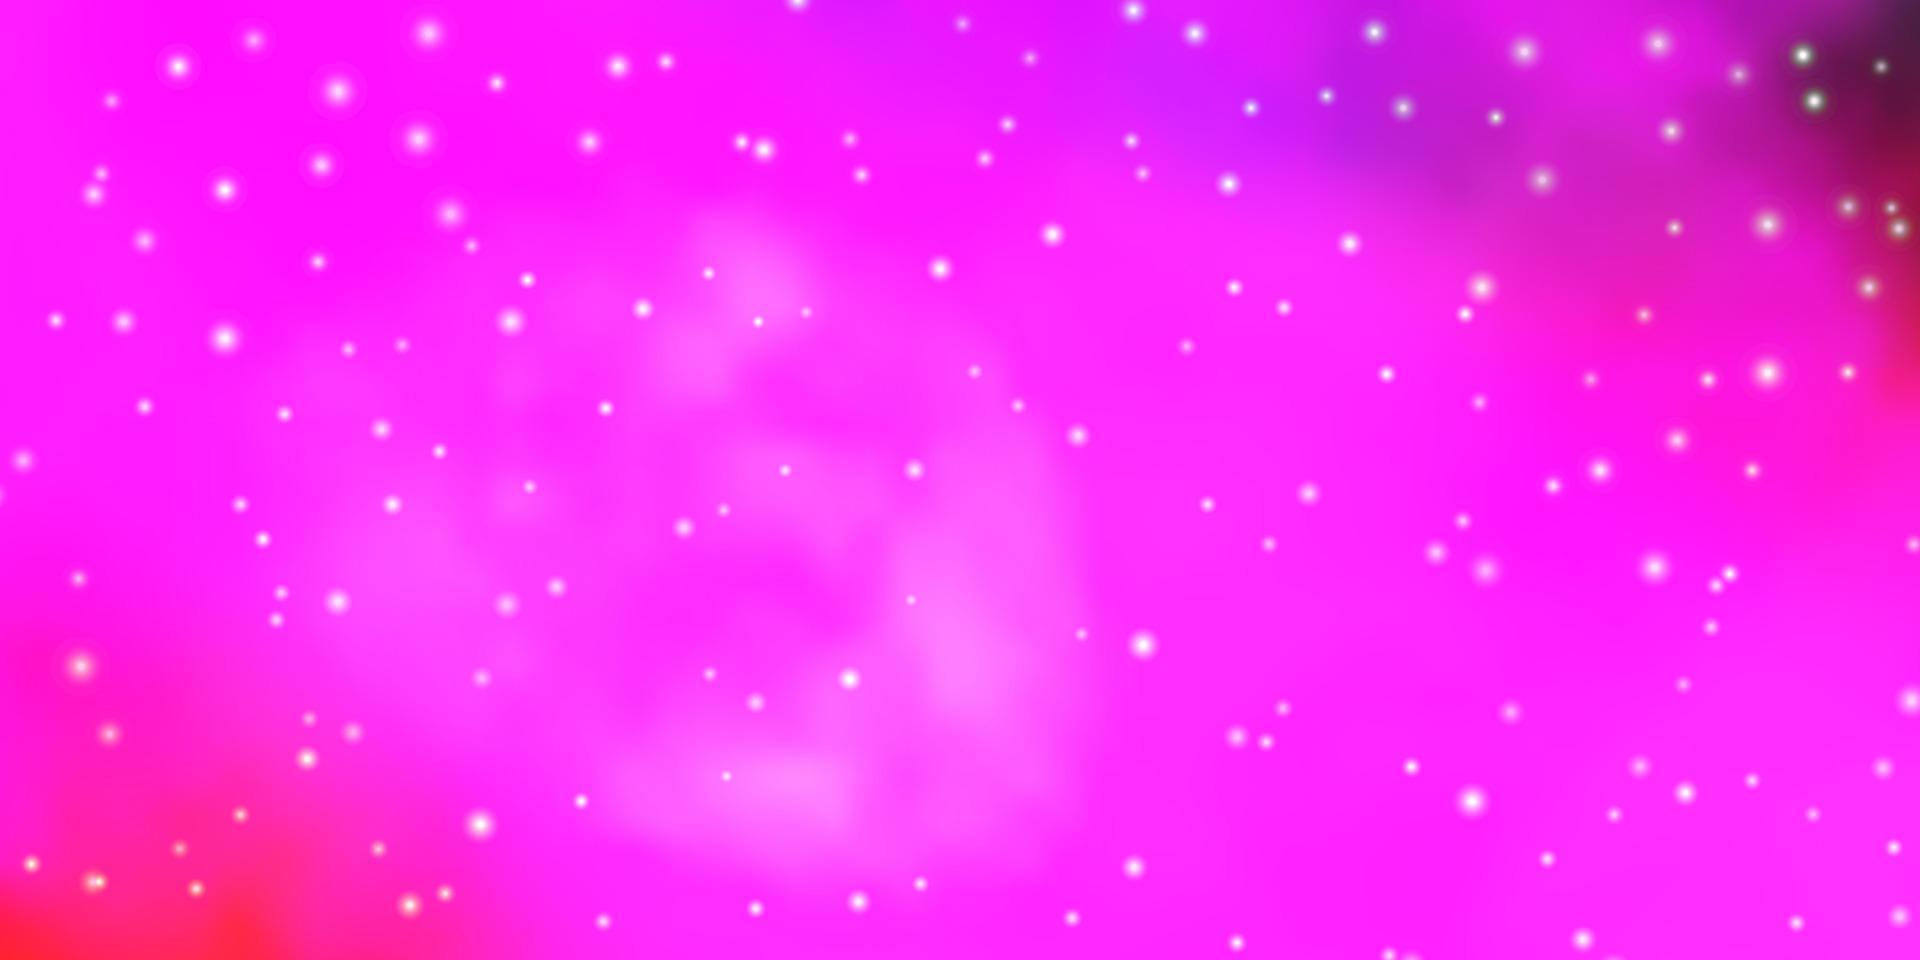 plantilla de vector de color púrpura oscuro, rosa con estrellas de neón.